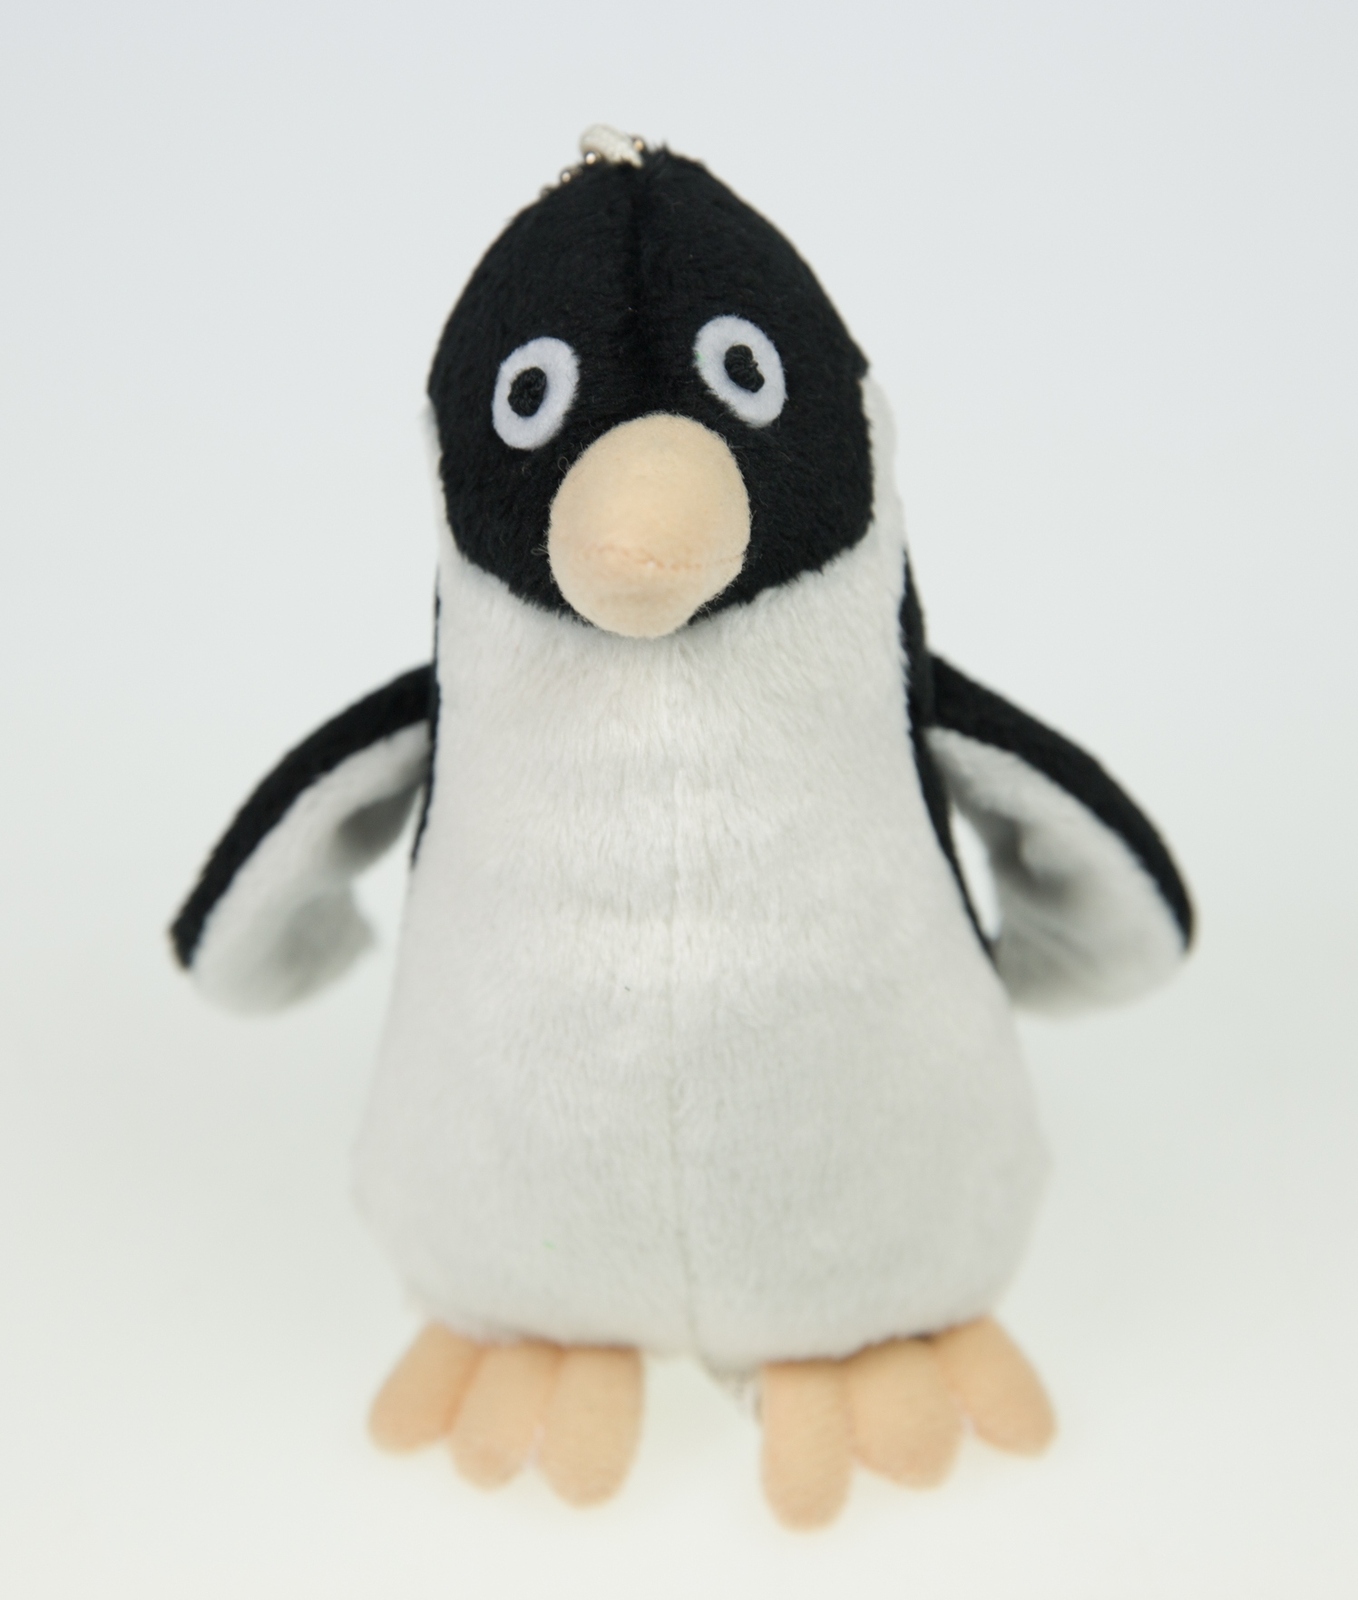 Penguin Noah's Ark Plush Toys Stuffed Toy Animal Key Chain 4 inches - $5.00